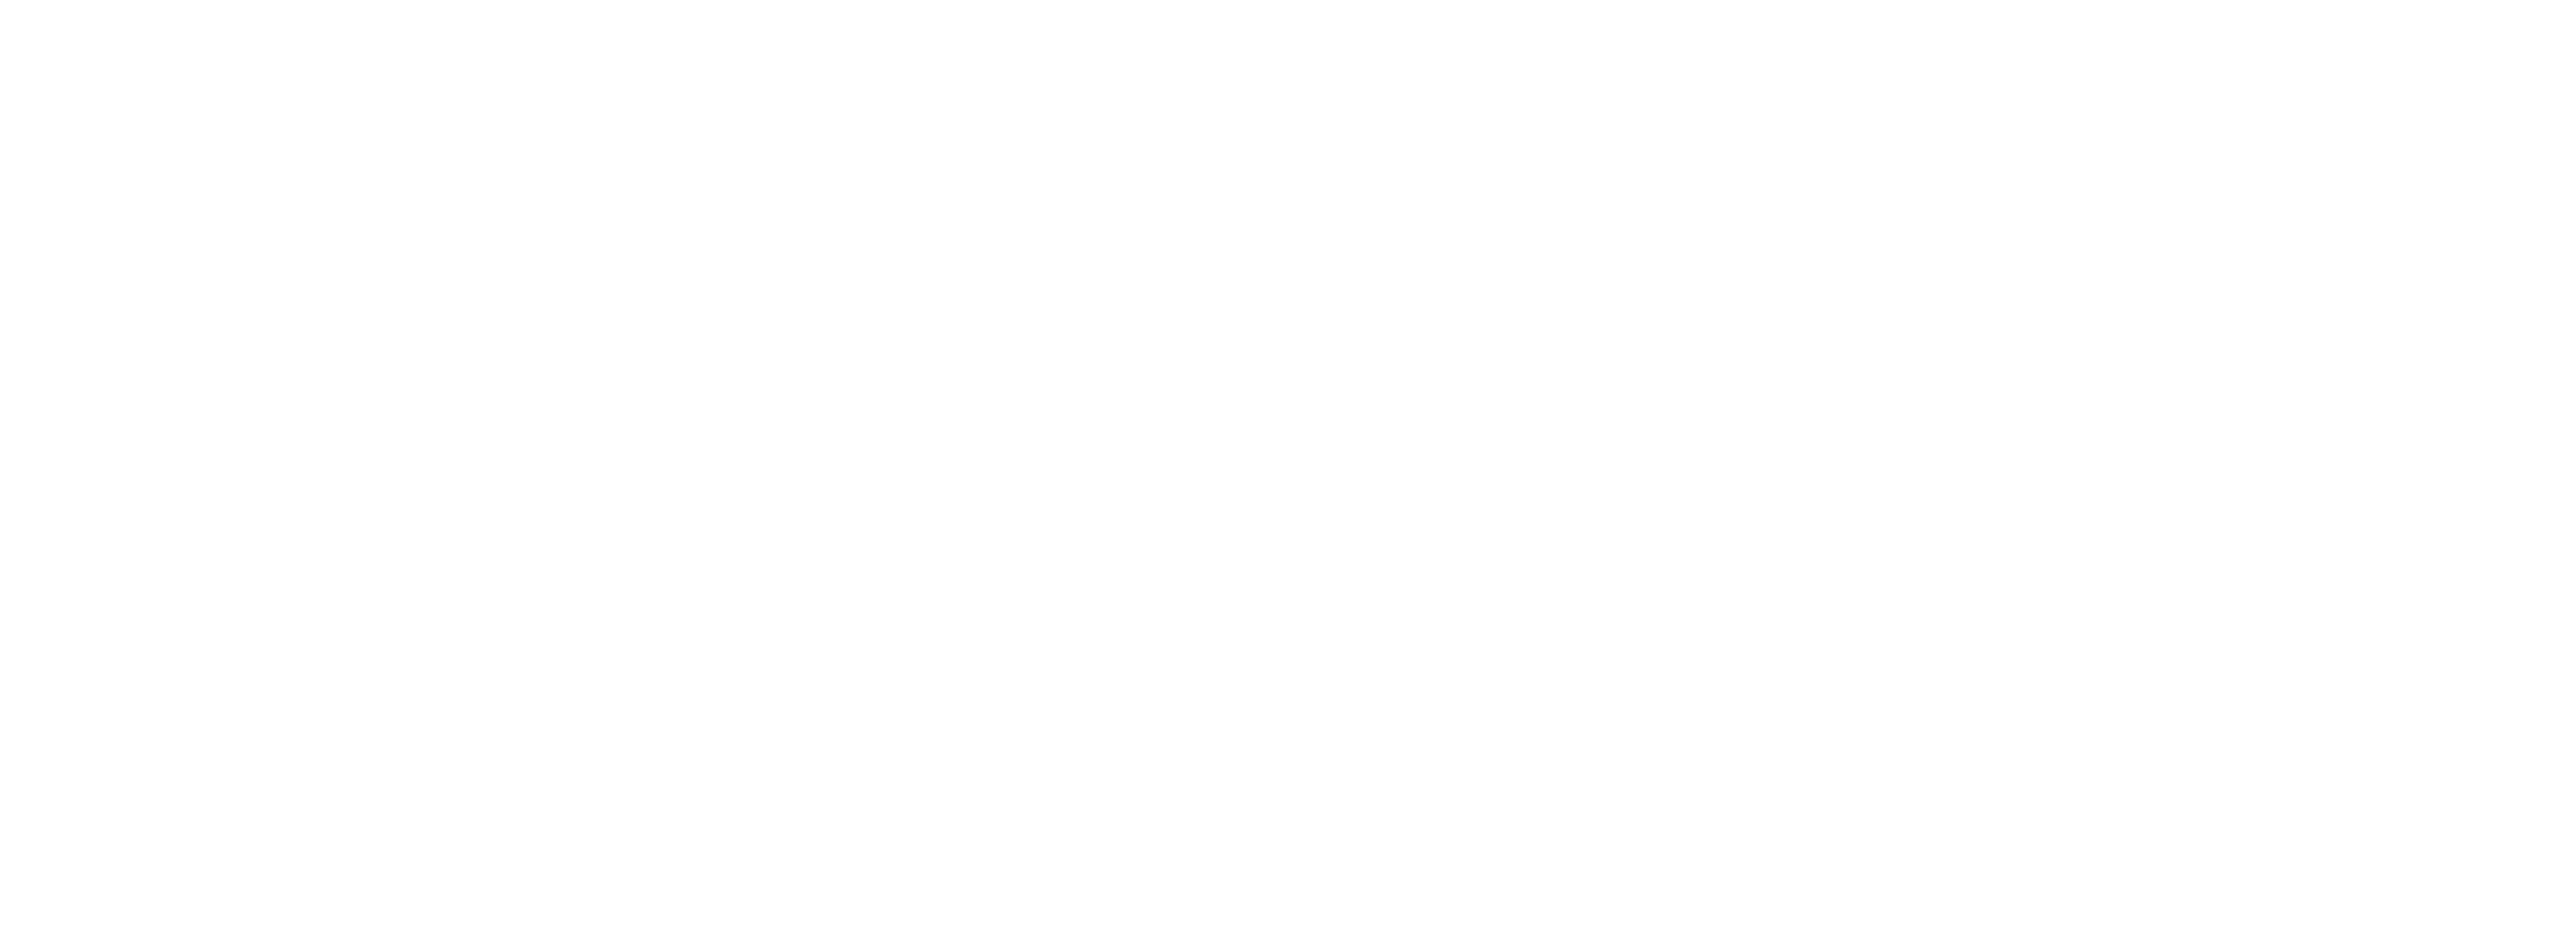 Space Coast Living Magazine